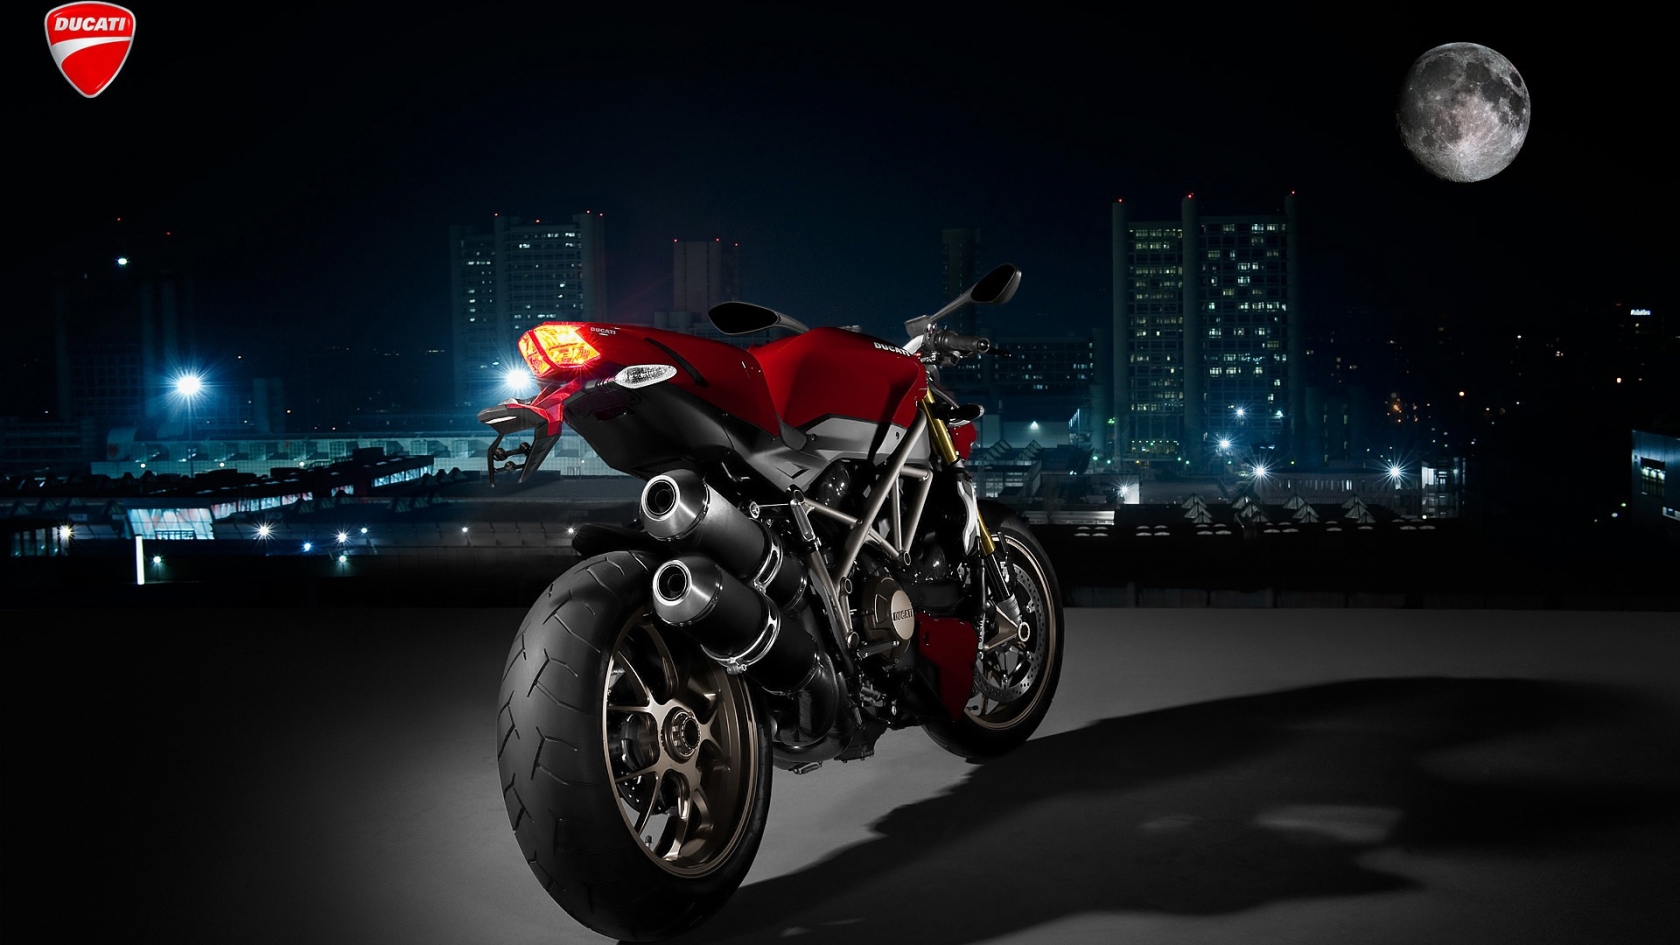 Ducati Super Sport Rear Angle for 1680 x 945 HDTV resolution